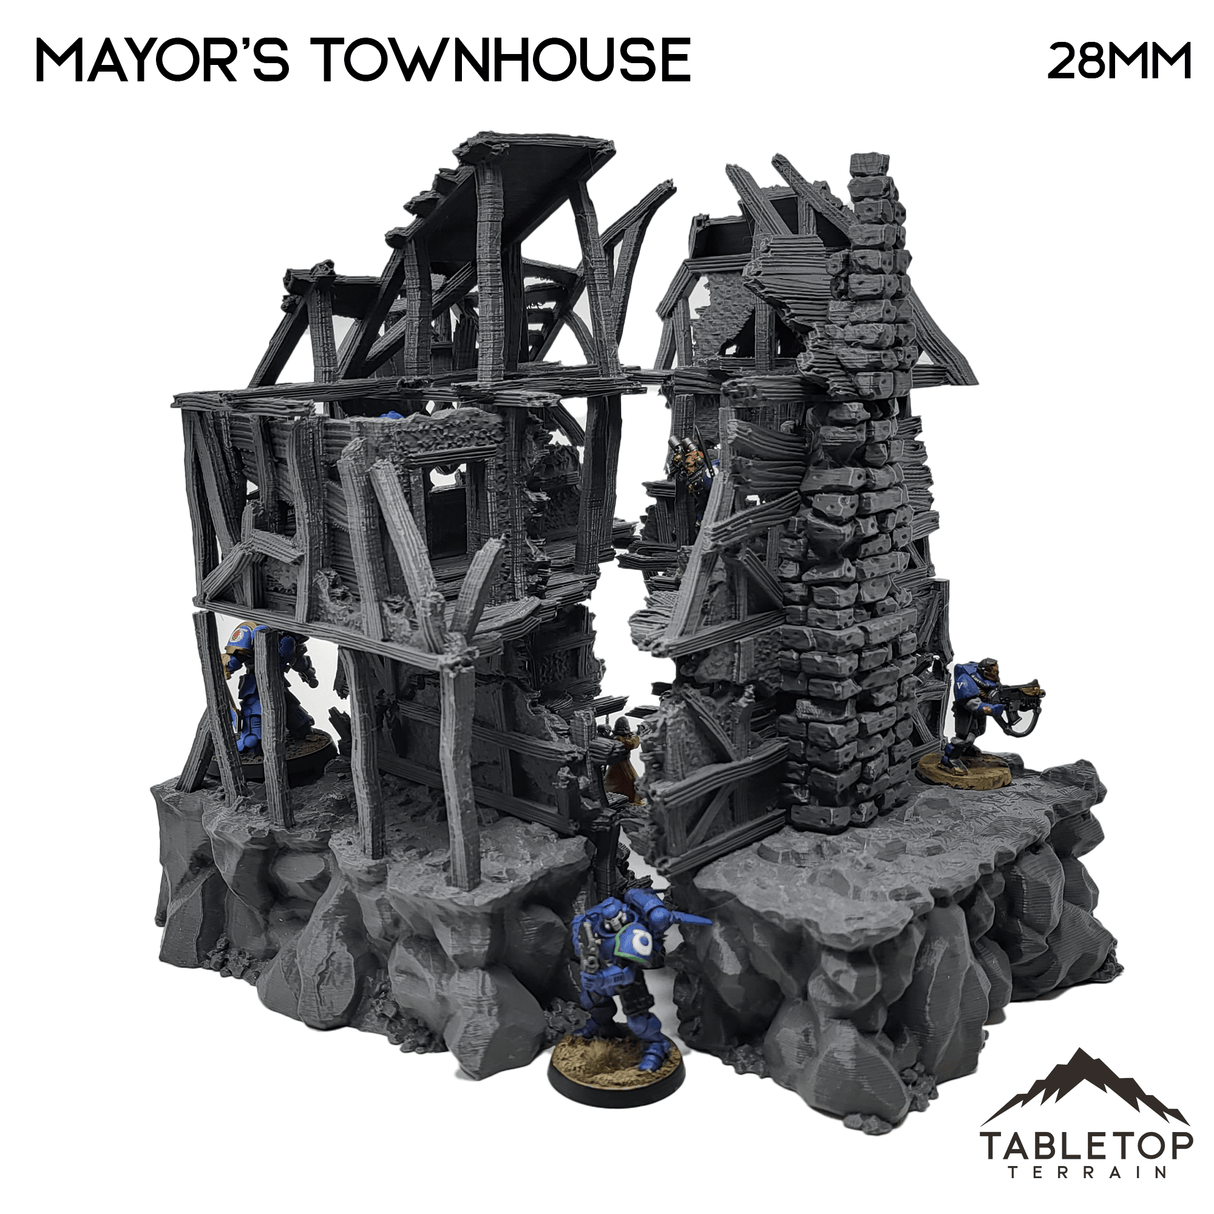 Tabletop Terrain Building Mayor's Townhouse - Fantasy Building